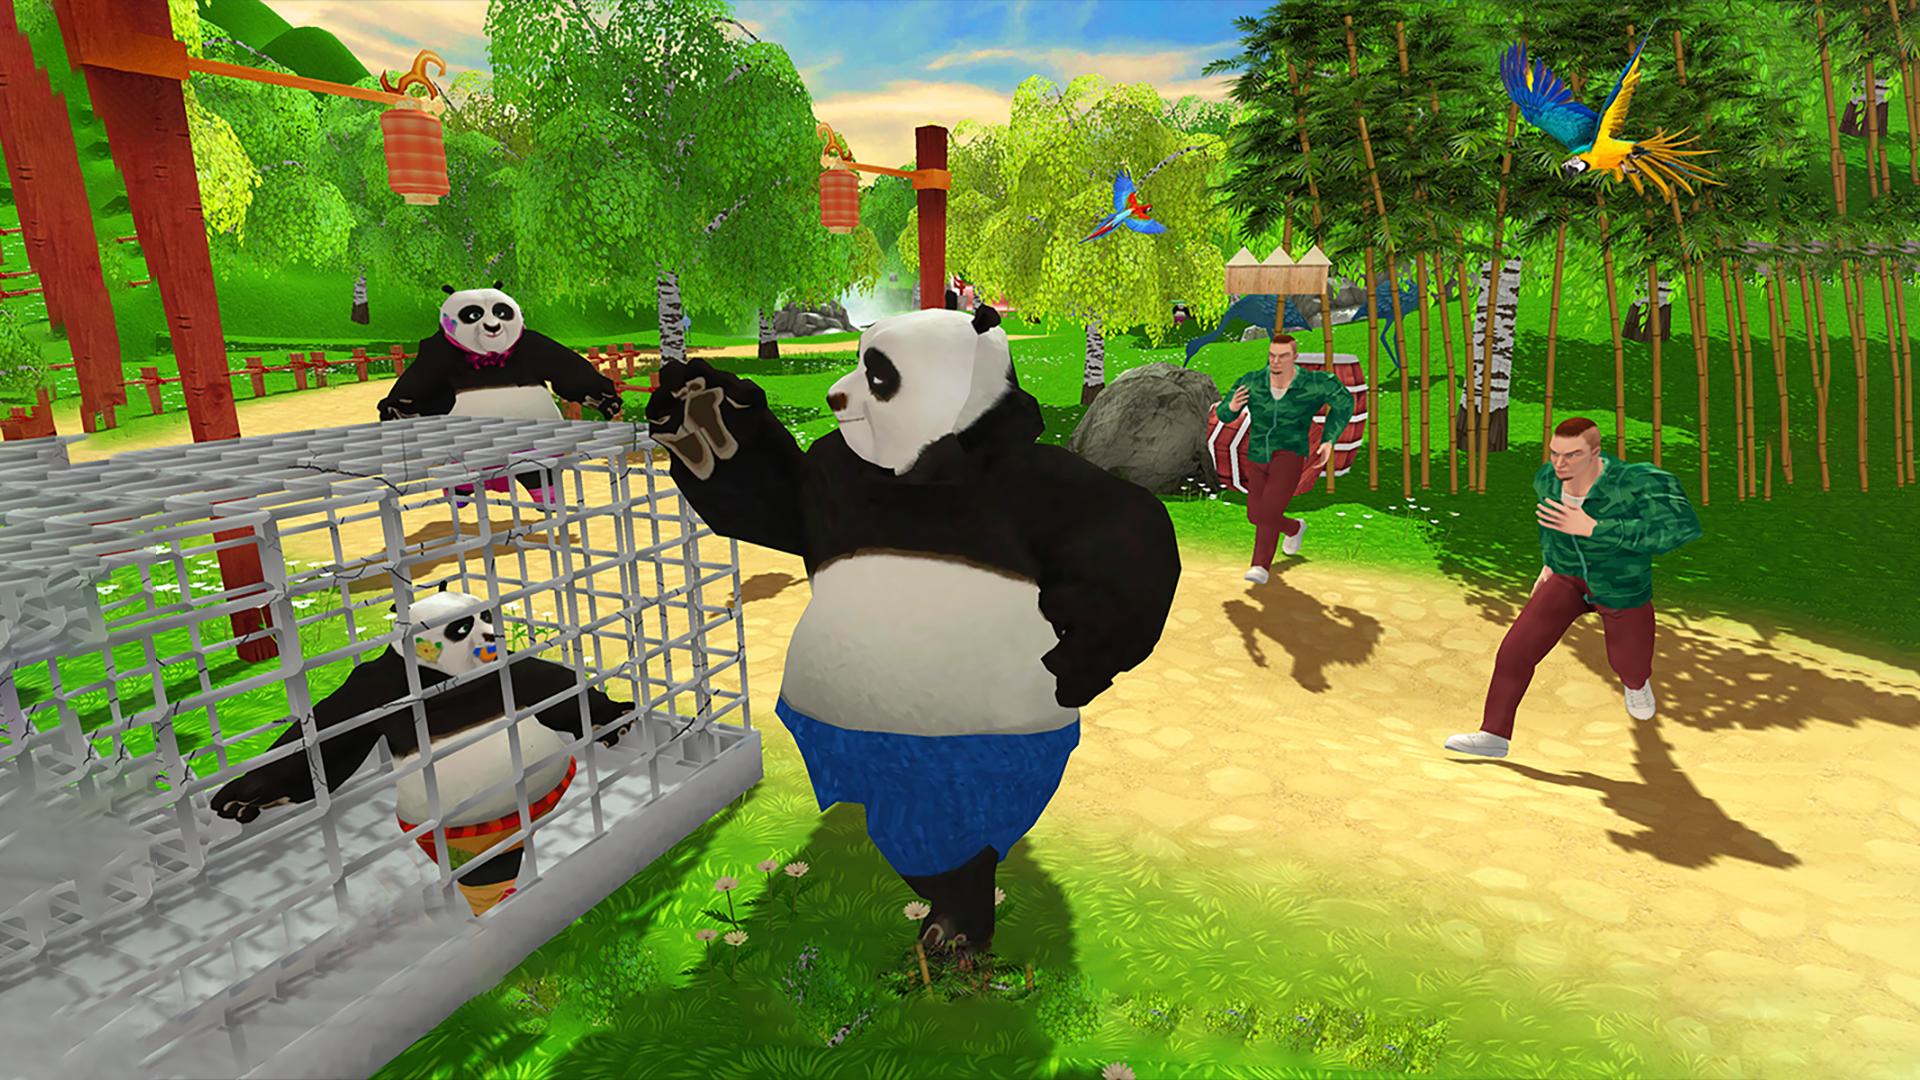 Panda games игры. Панда игра Панда игра. Игры с пандой для детей. Игра про панду Старая. Игра про панду фермера.